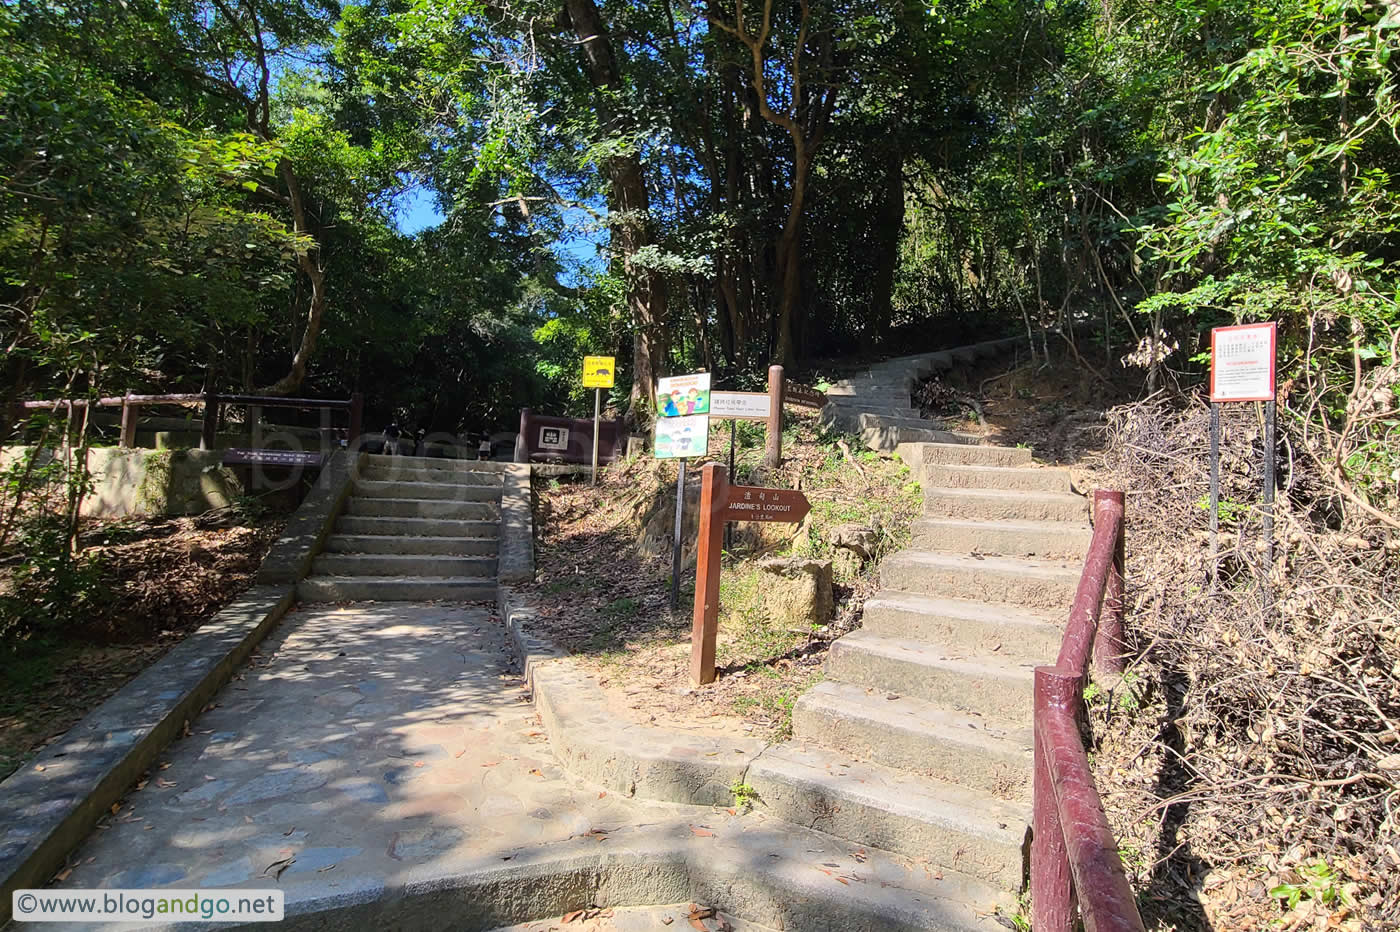 HK Trail 5 - Start of the Long Climb